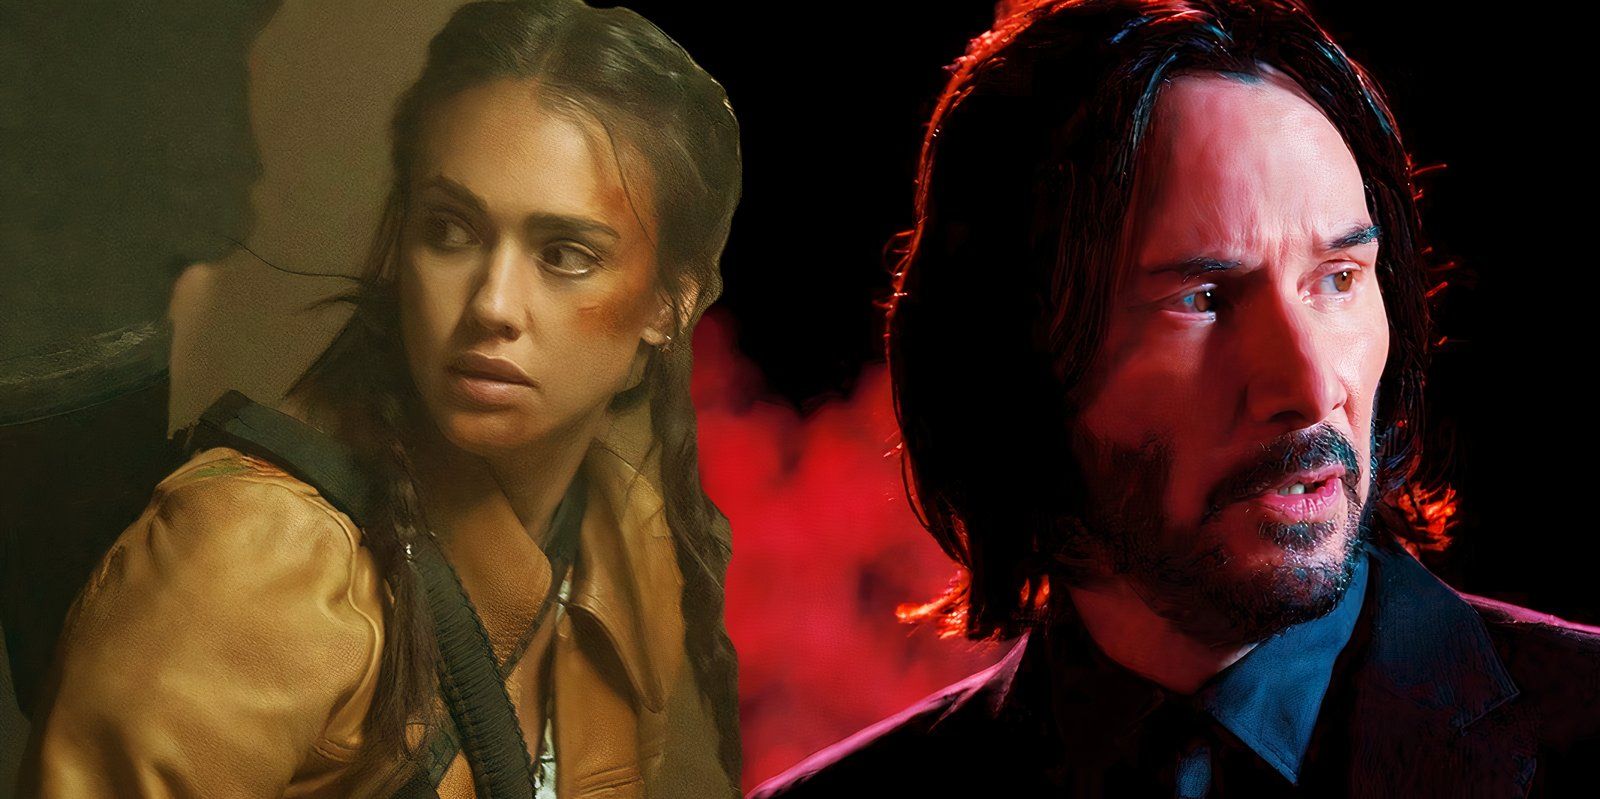 Jessica Alba as Parker in Trigger Warning next to Keanu Reeves as John Wick in John Wick